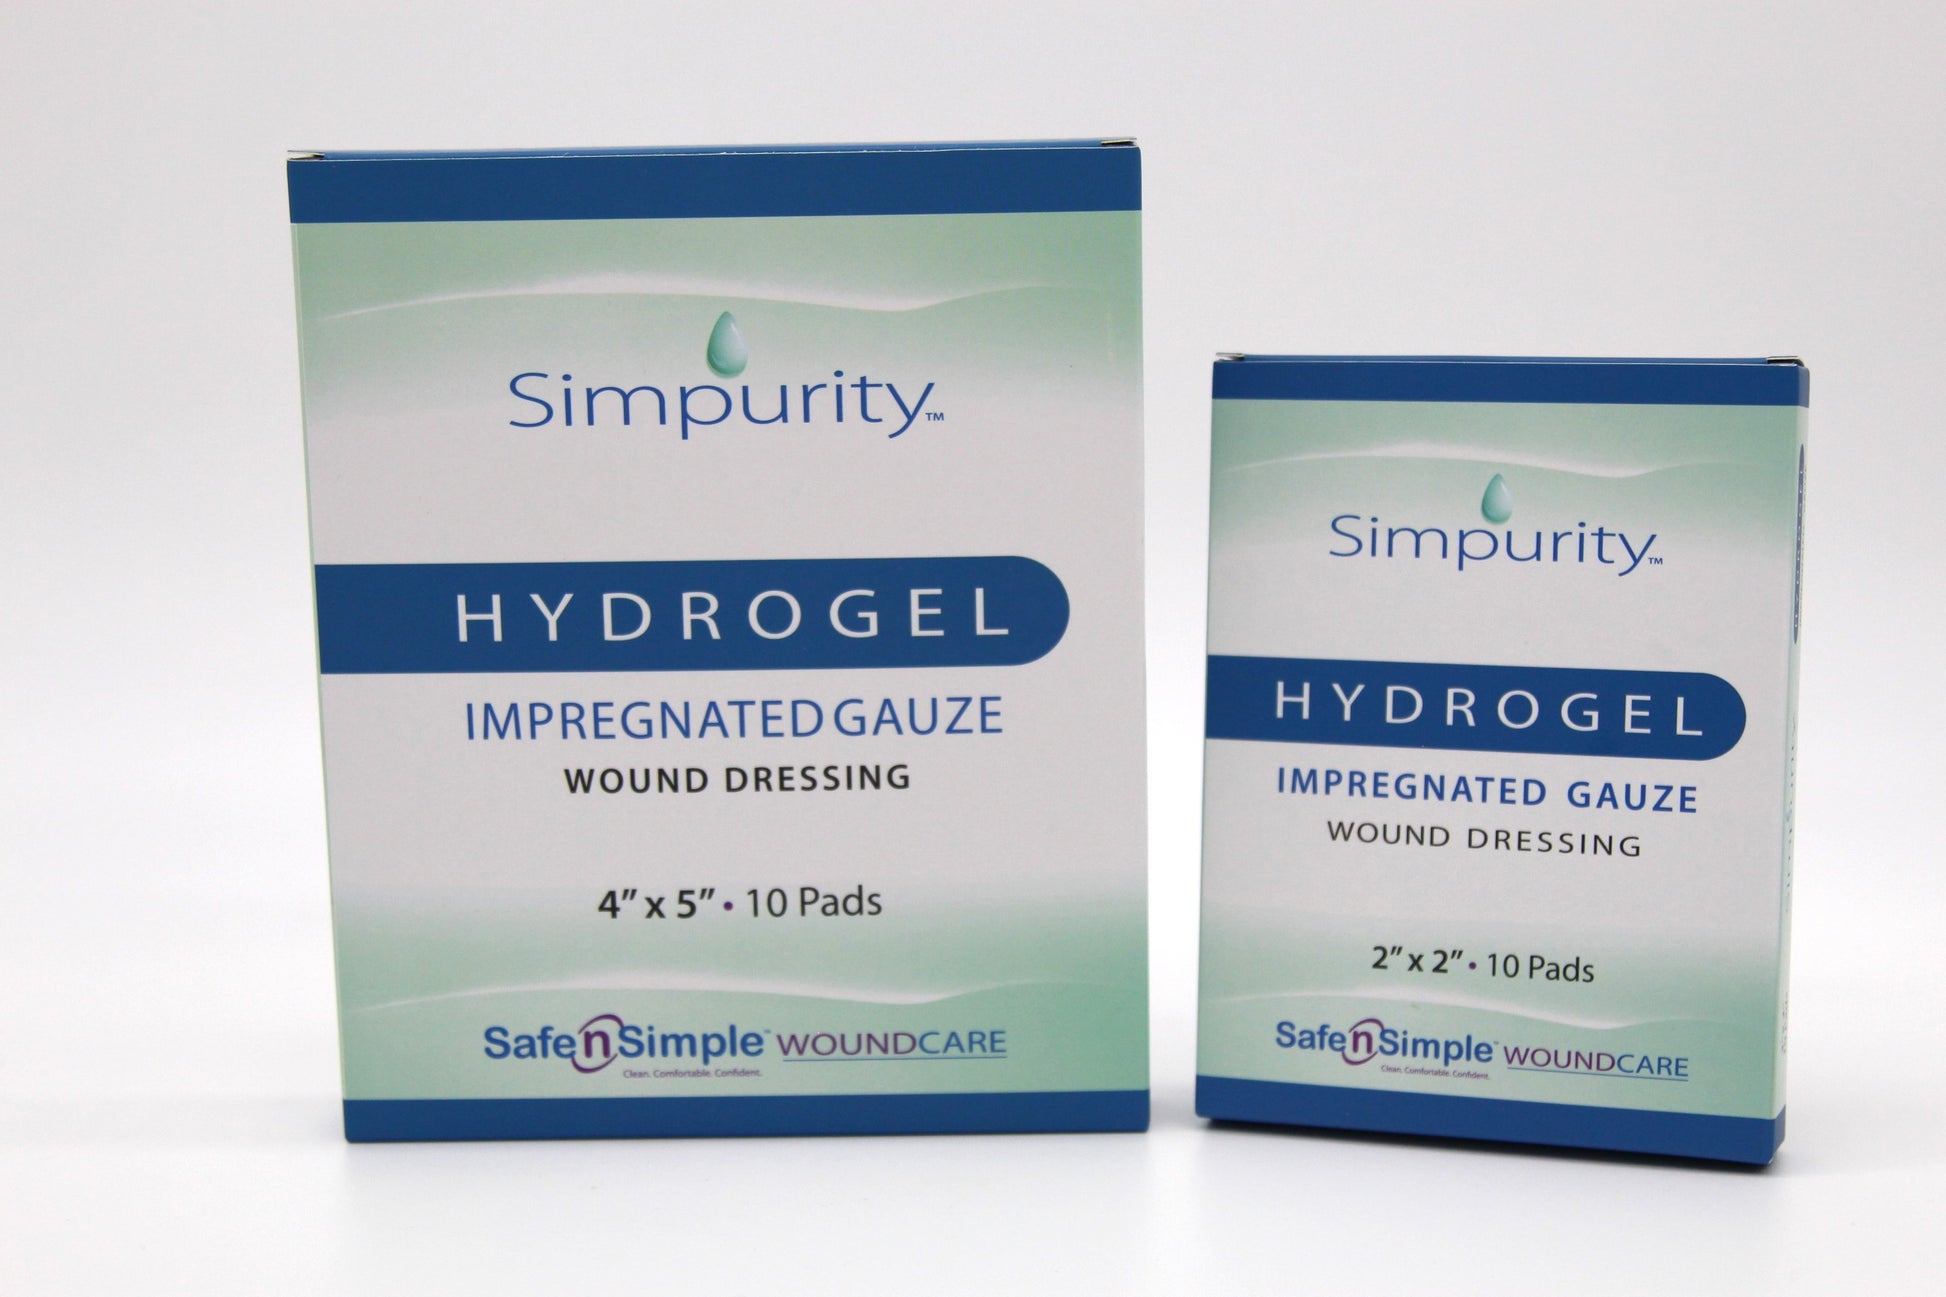 HydroGel Impregnated Gauze | Gauze dressings | Wound dressing | Wound care dressing